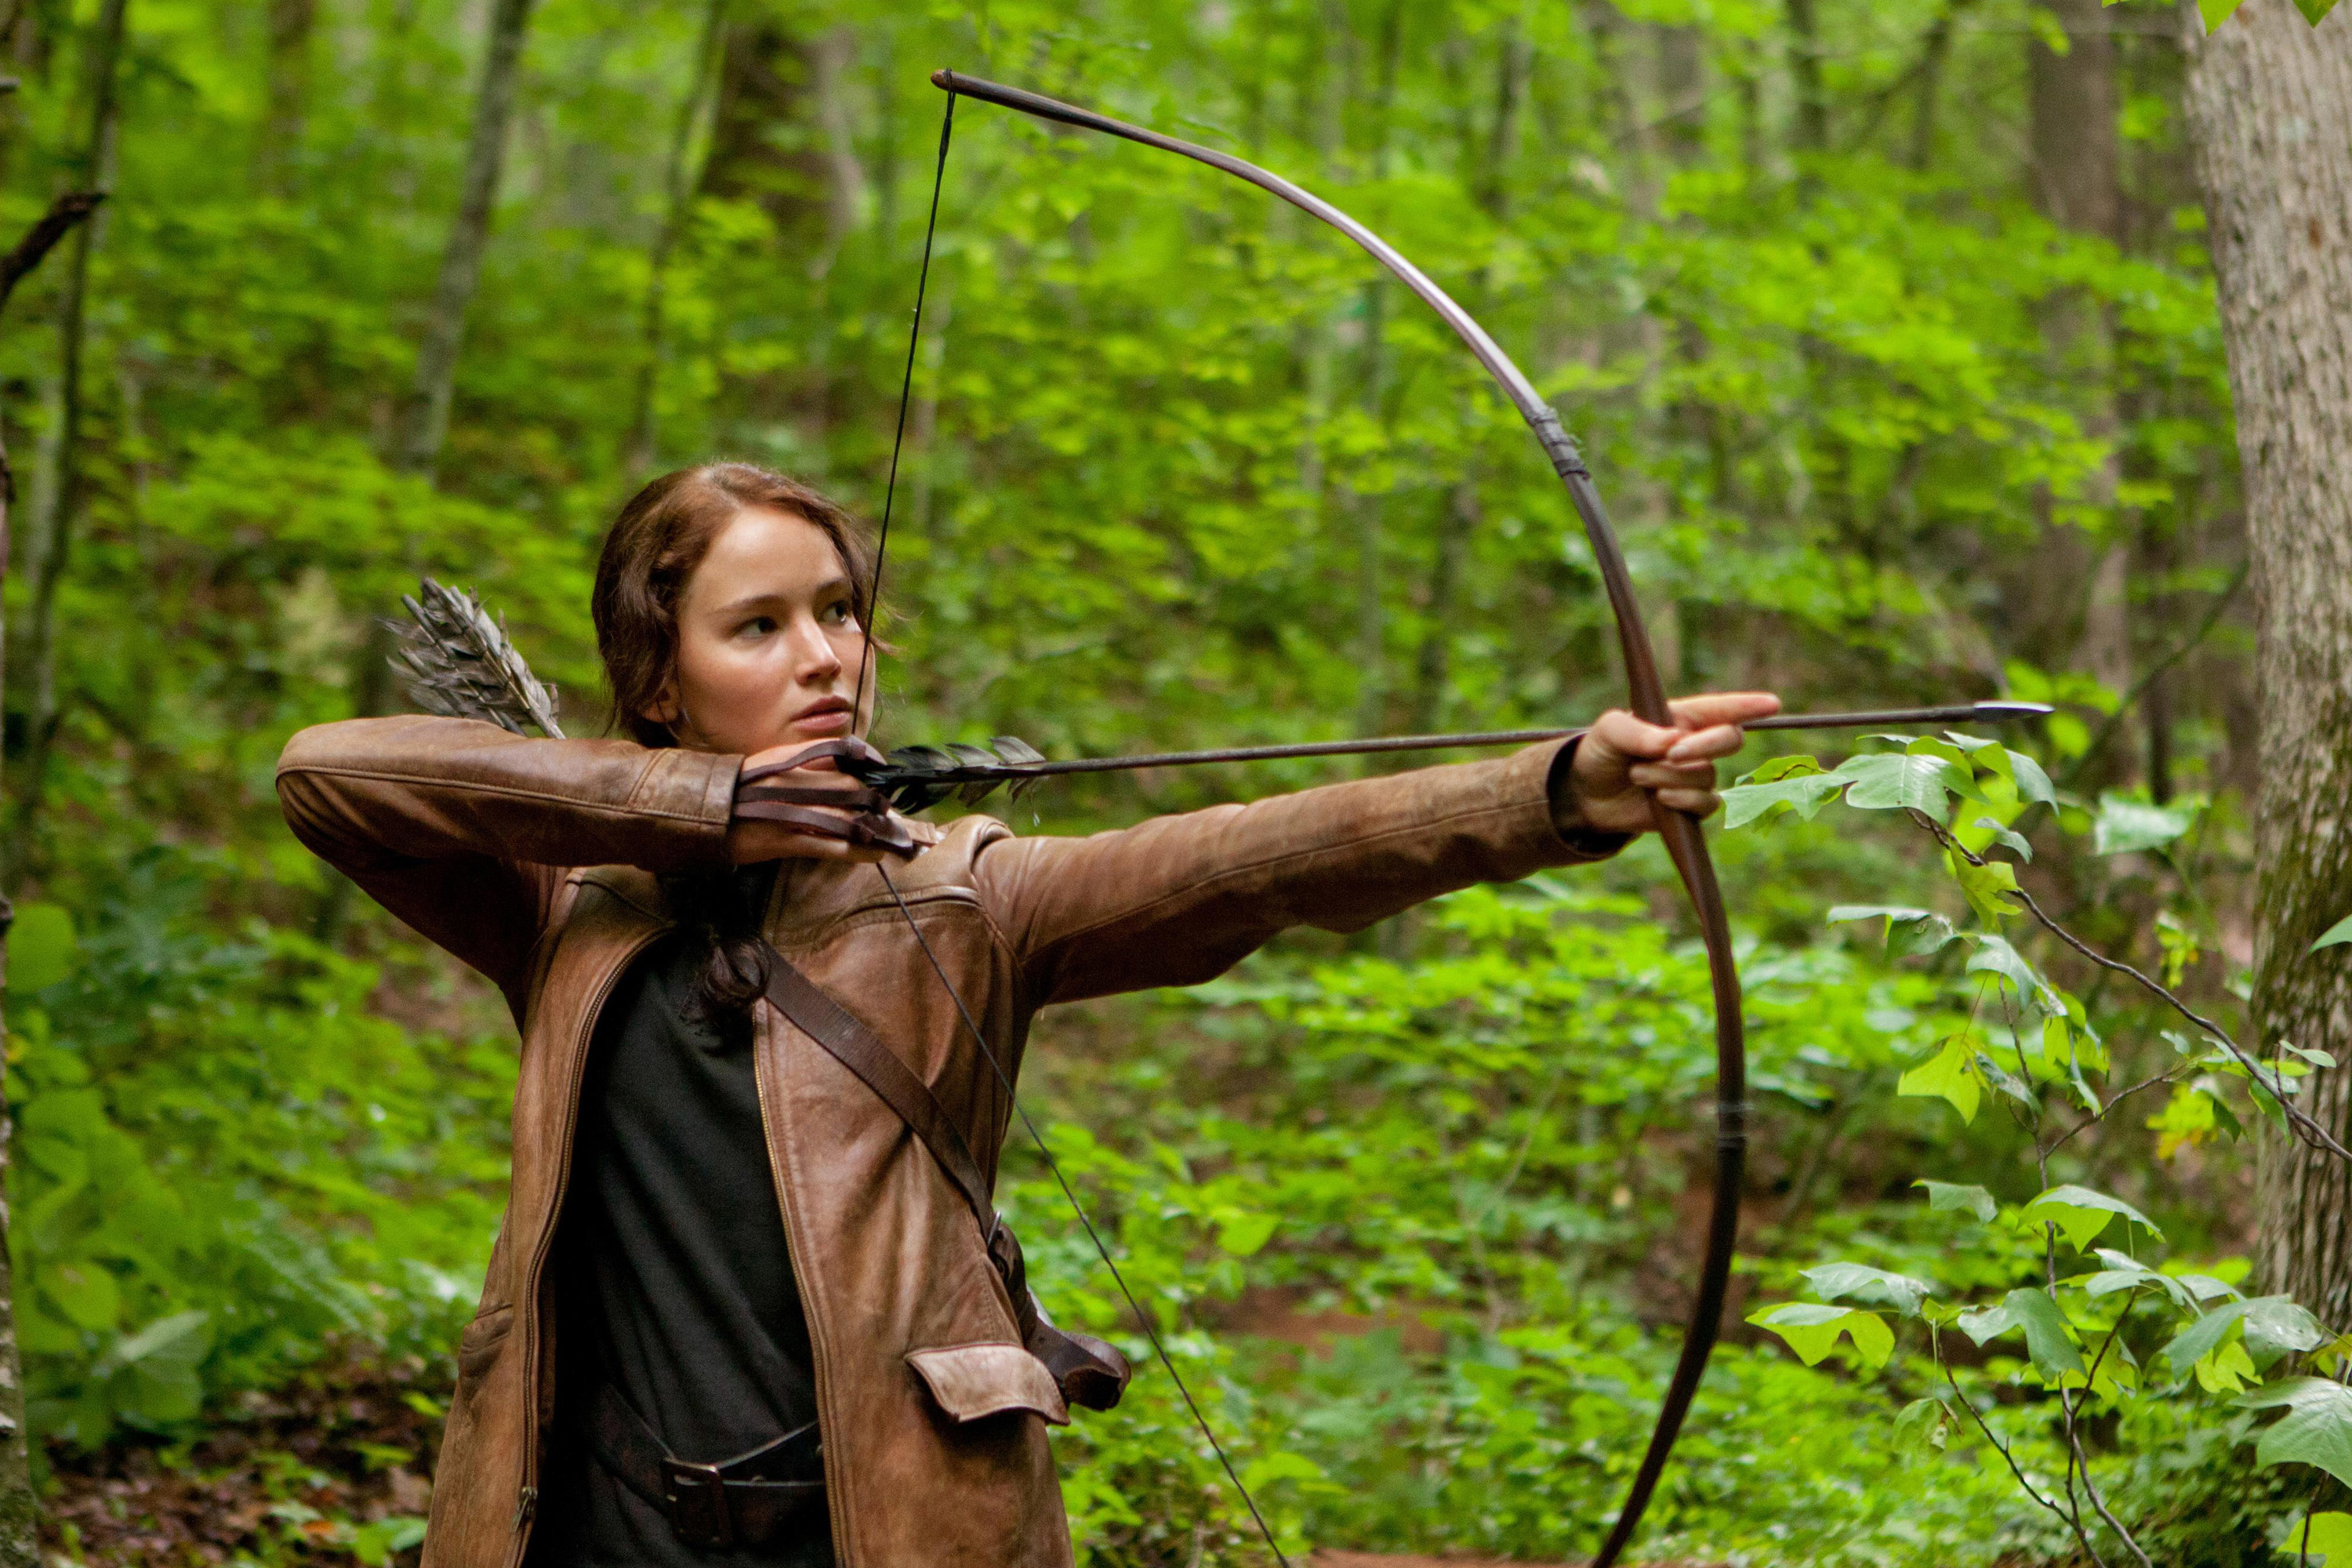 Katniss using a bow and arrow amid trees